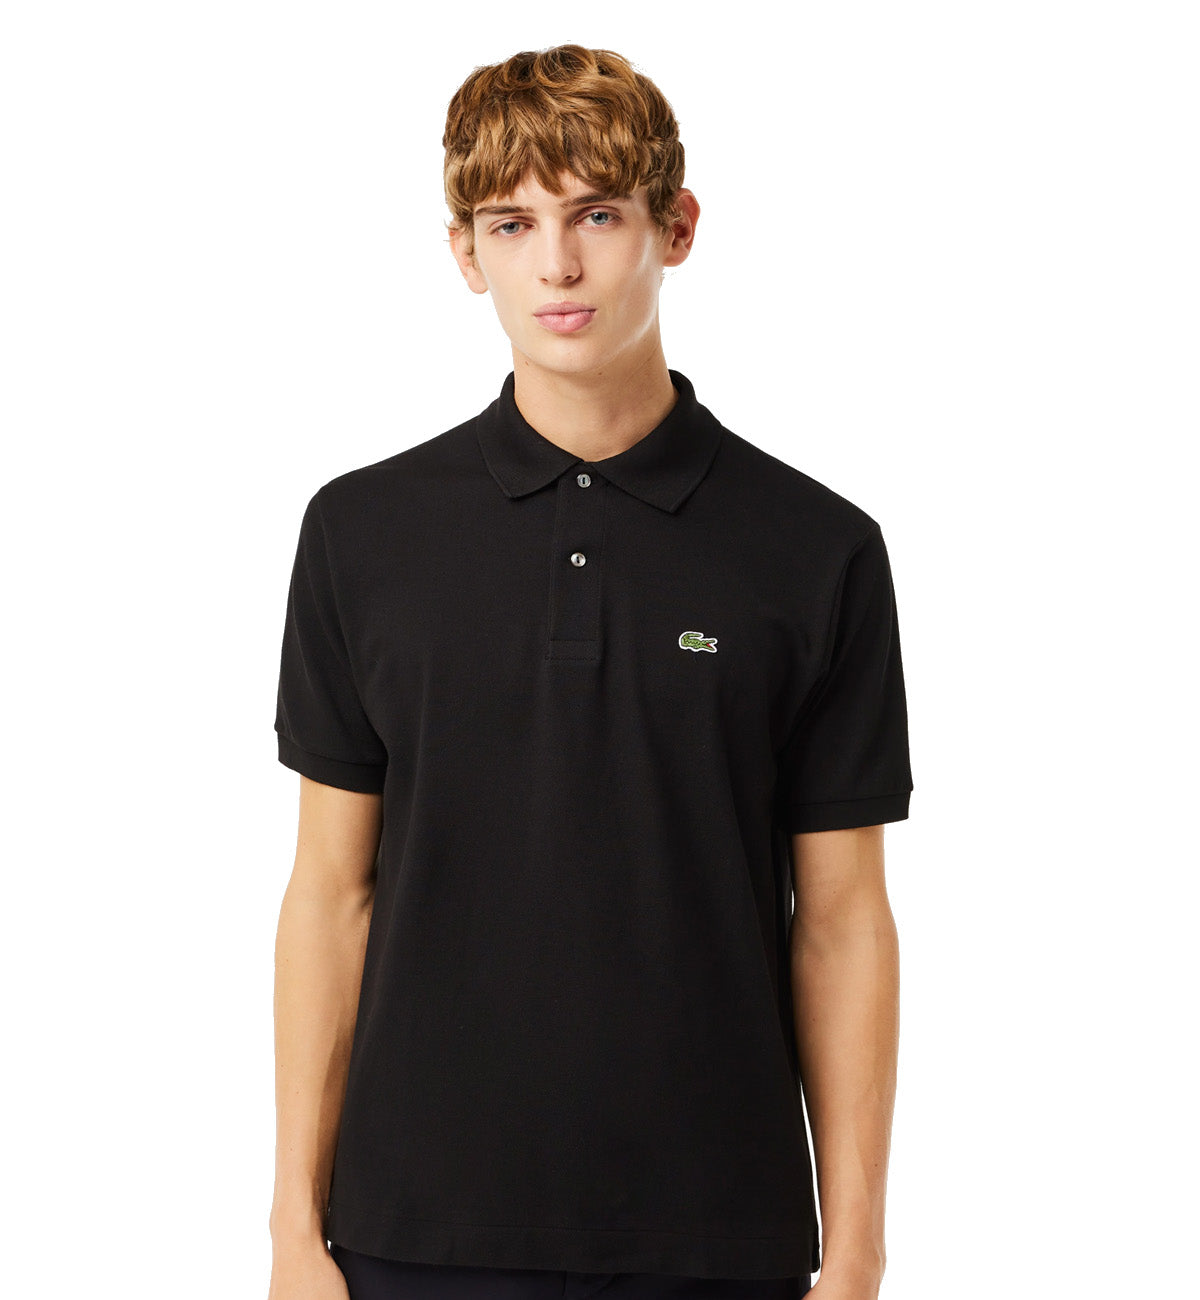 Lacoste Classic Fit Cotton Polo Shirt (Black)